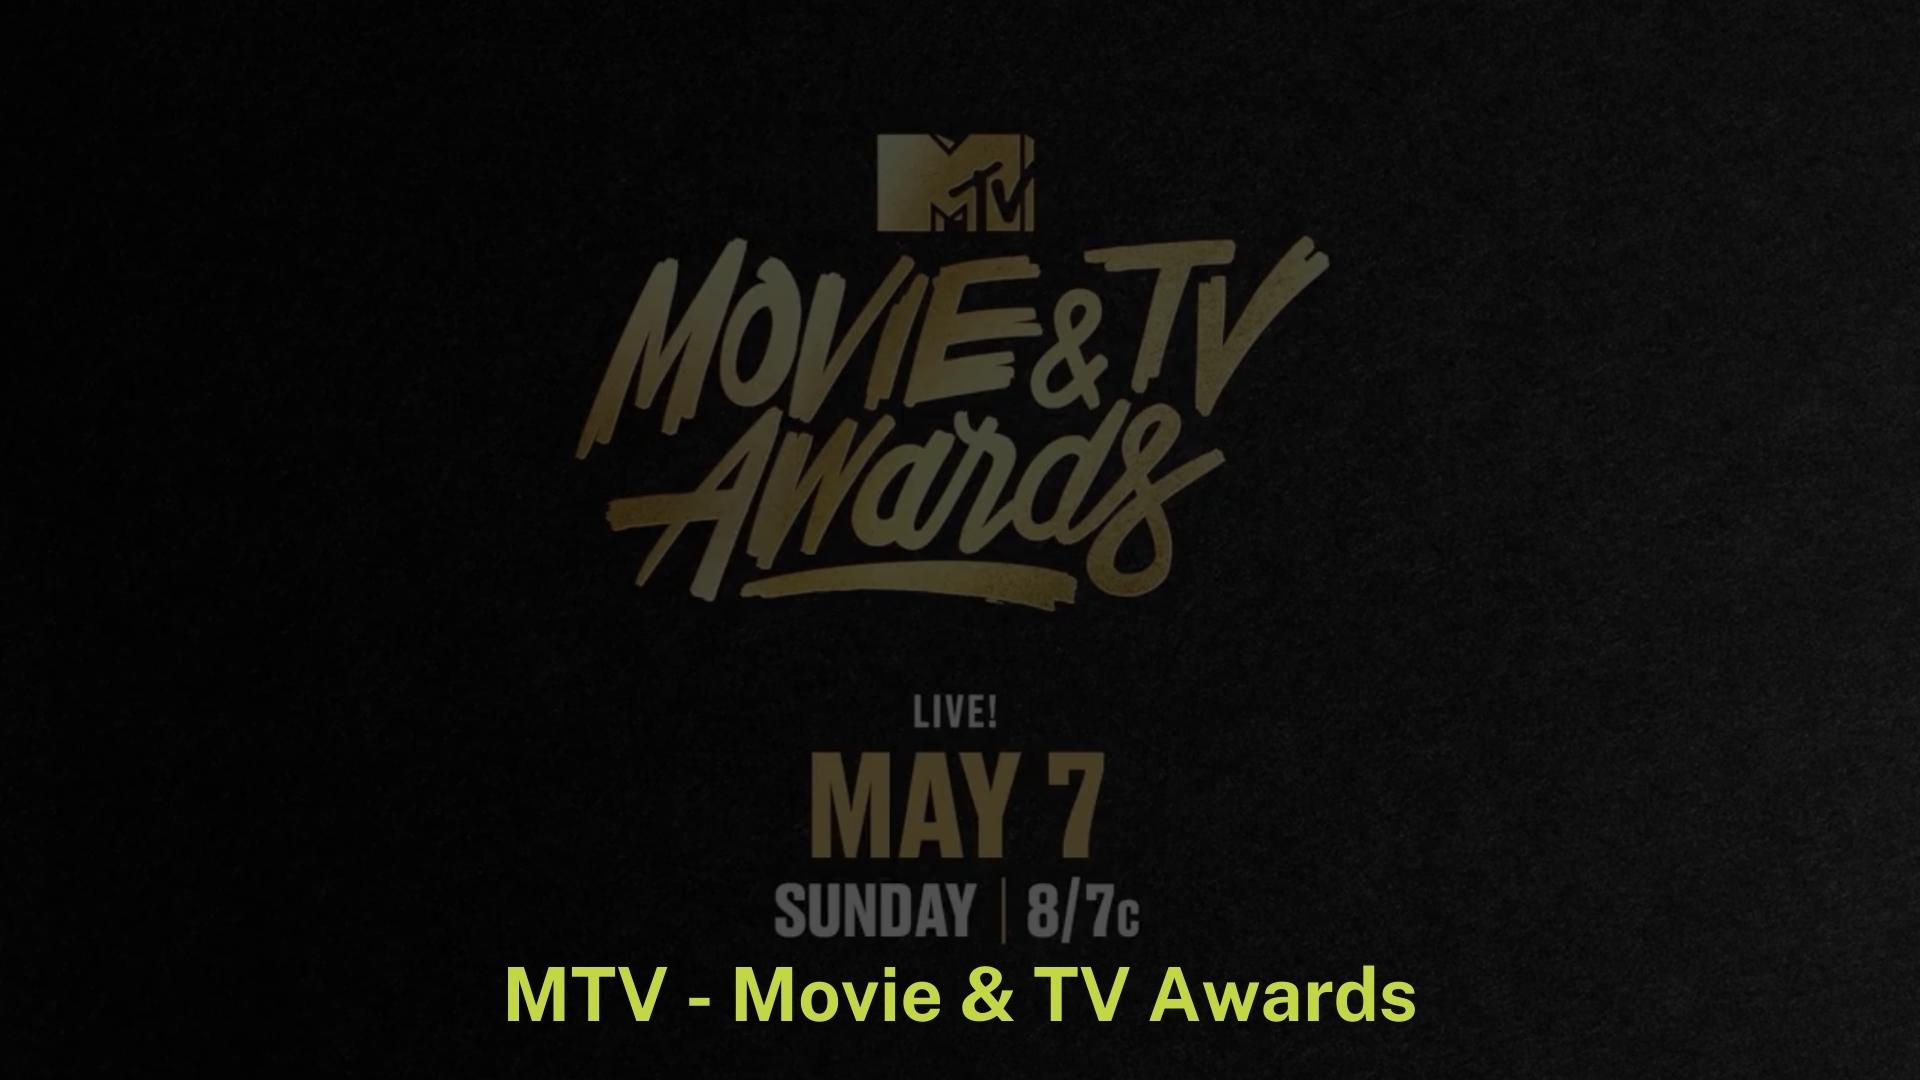 MTV - Movie & TV Awards!